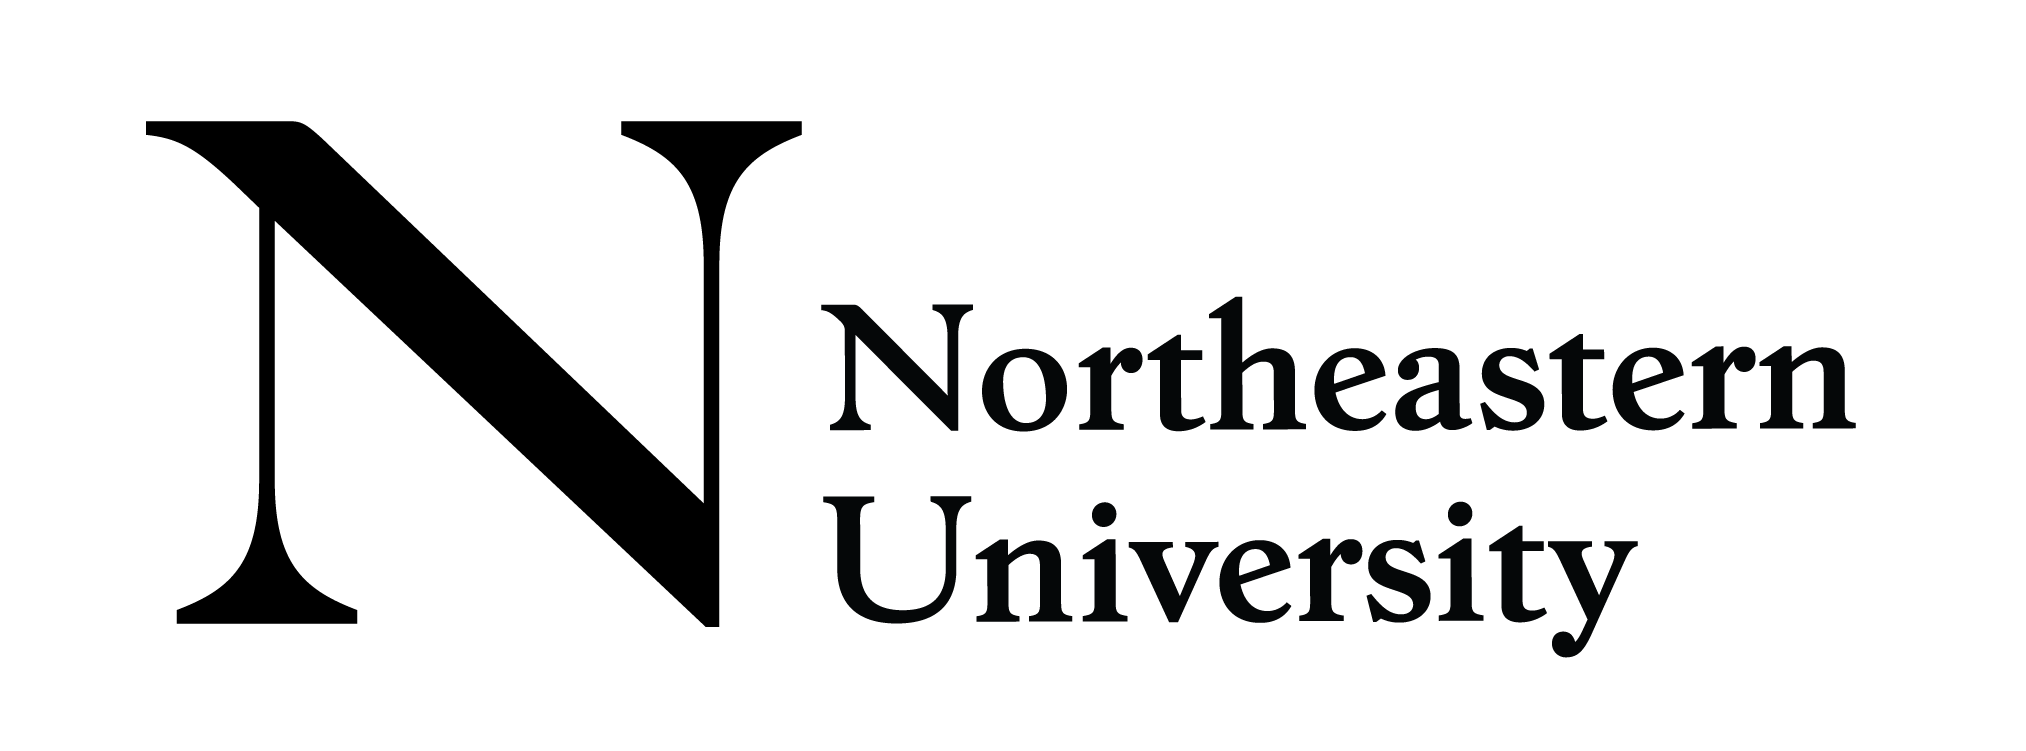 Northeastern University Cultural & Spiritual Life